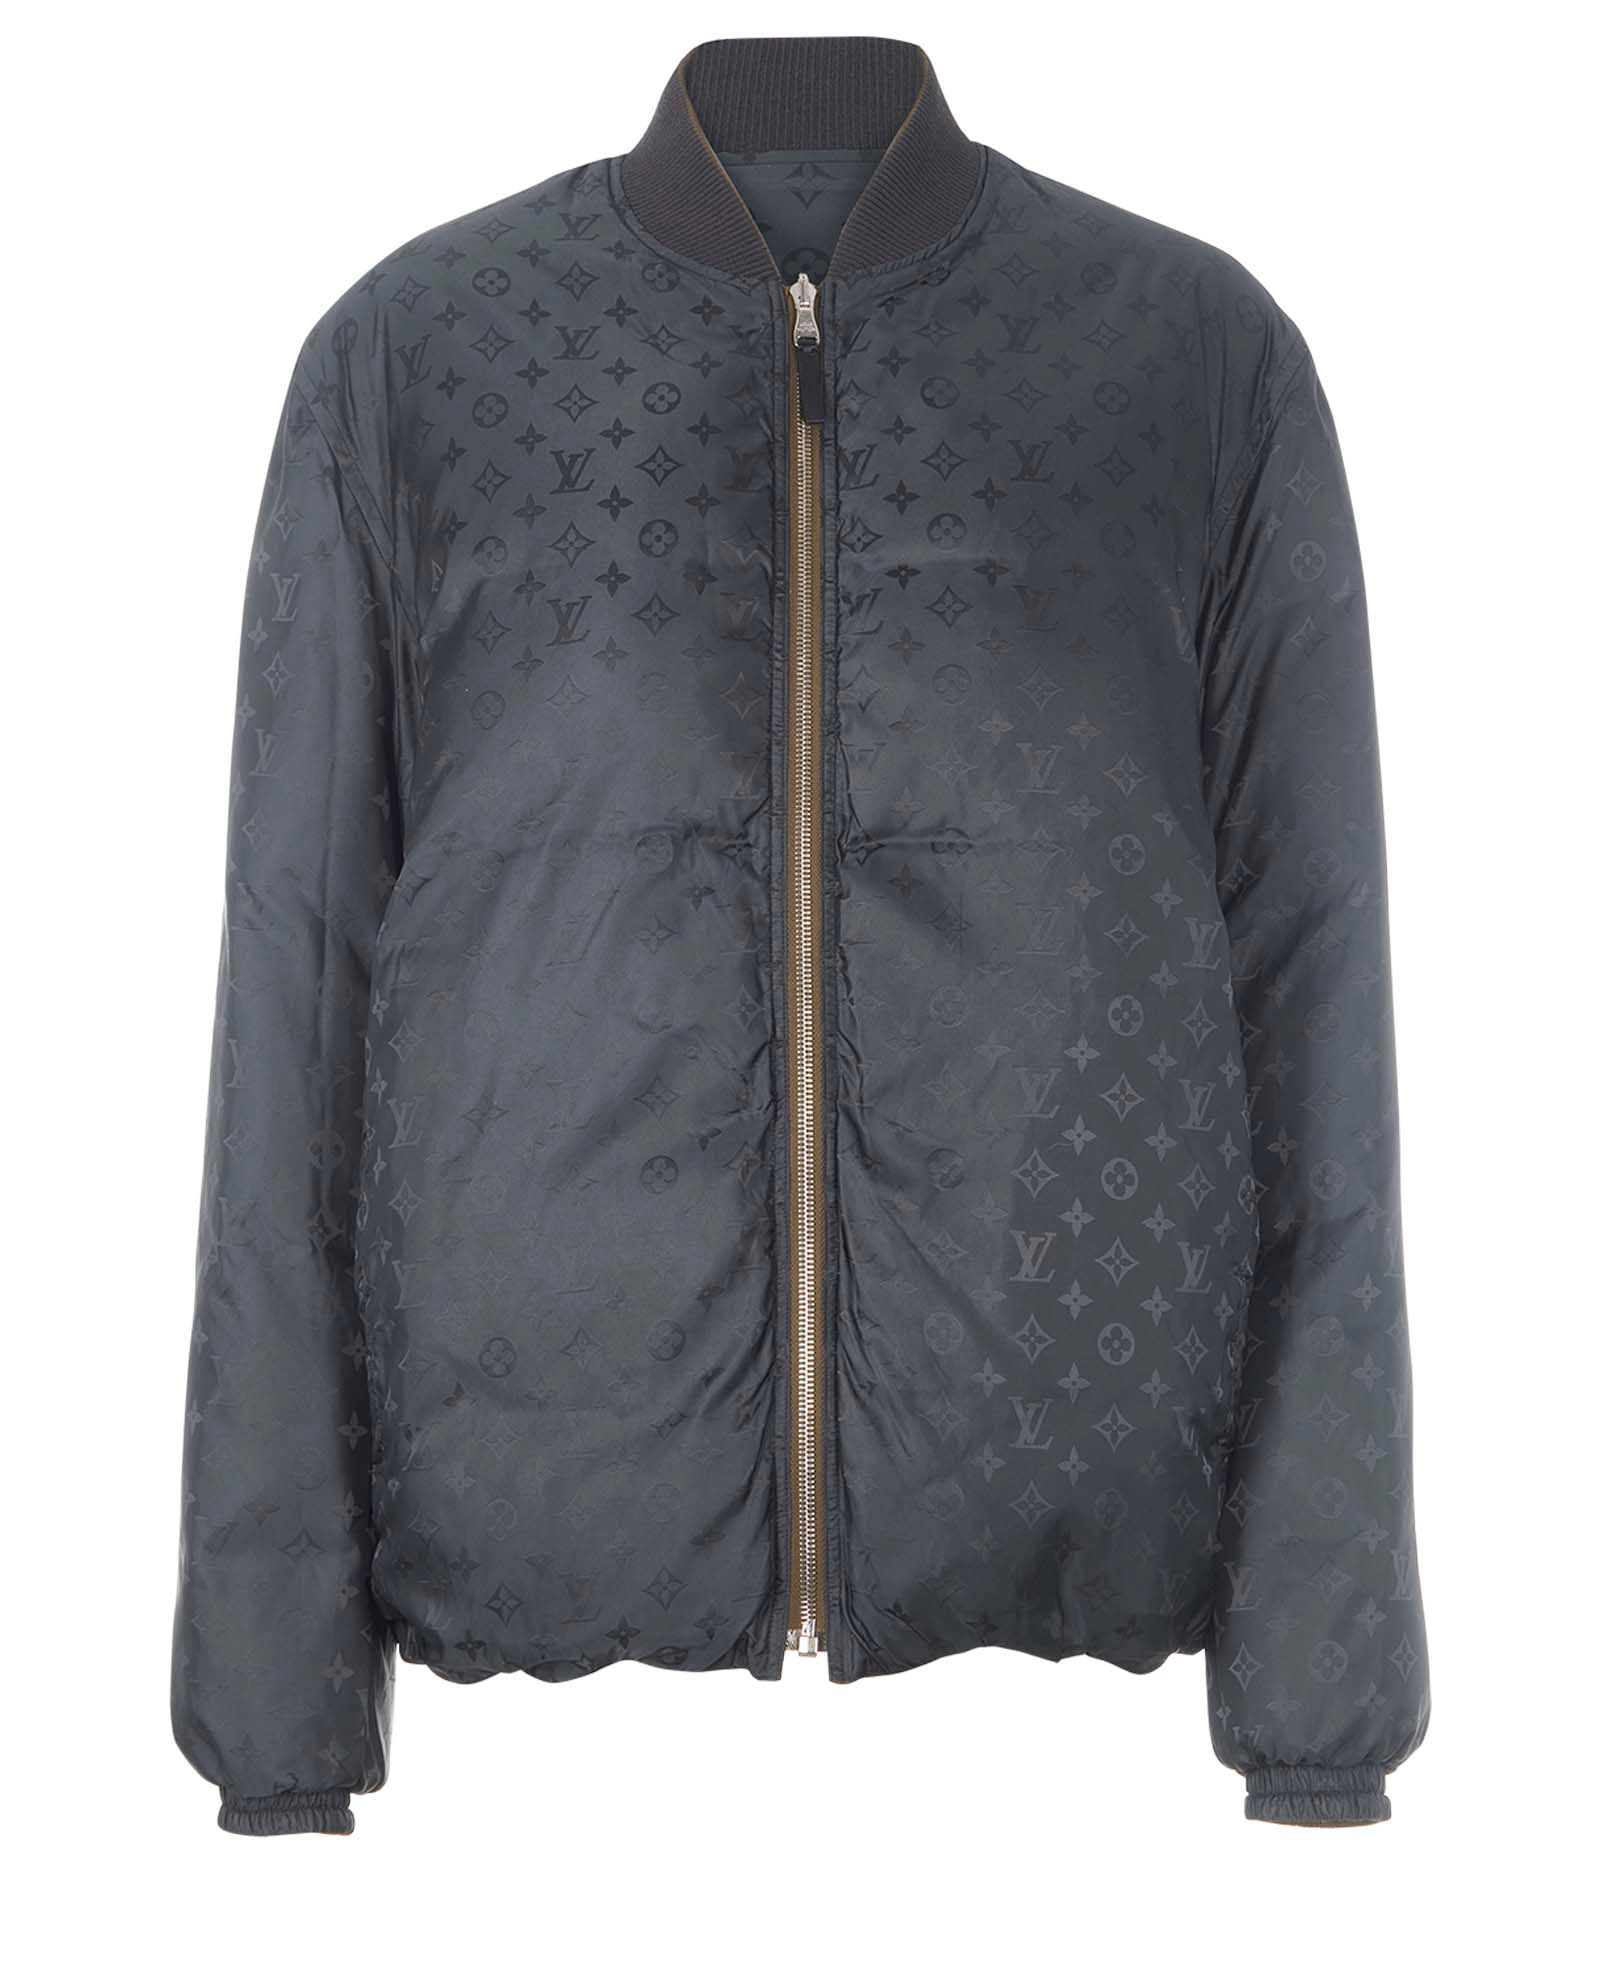 Louis Vuitton Men's Reversible Bomber Jacket